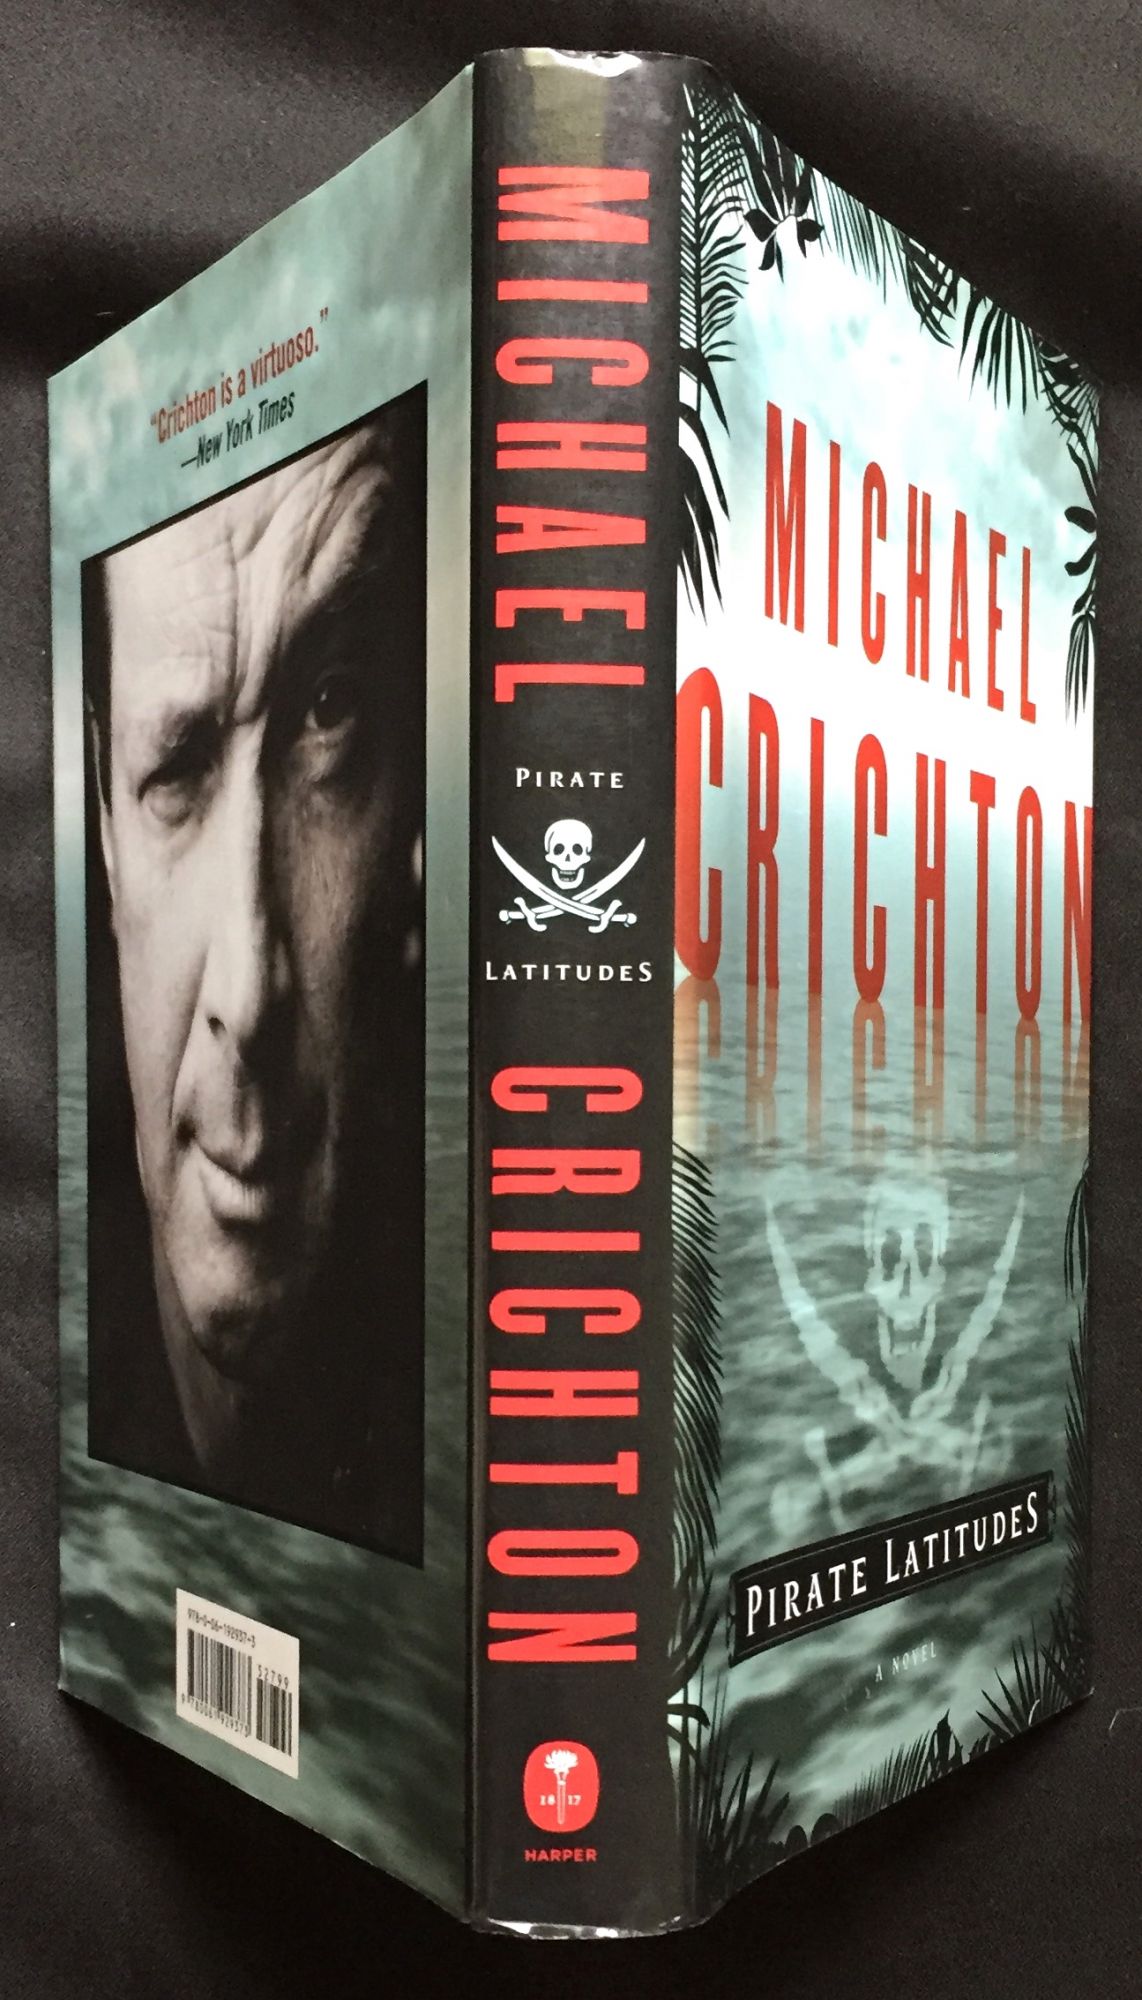 Pirate Latitudes; A Novel | Michael Crichton | First Edition